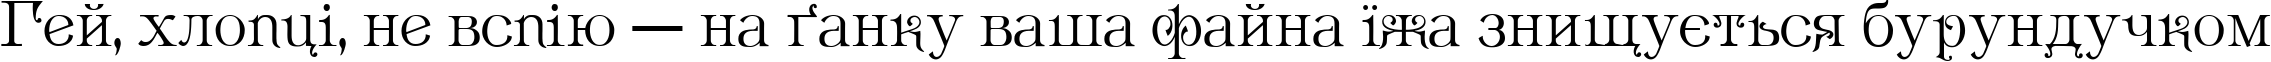 Пример написания шрифтом Ametist текста на украинском